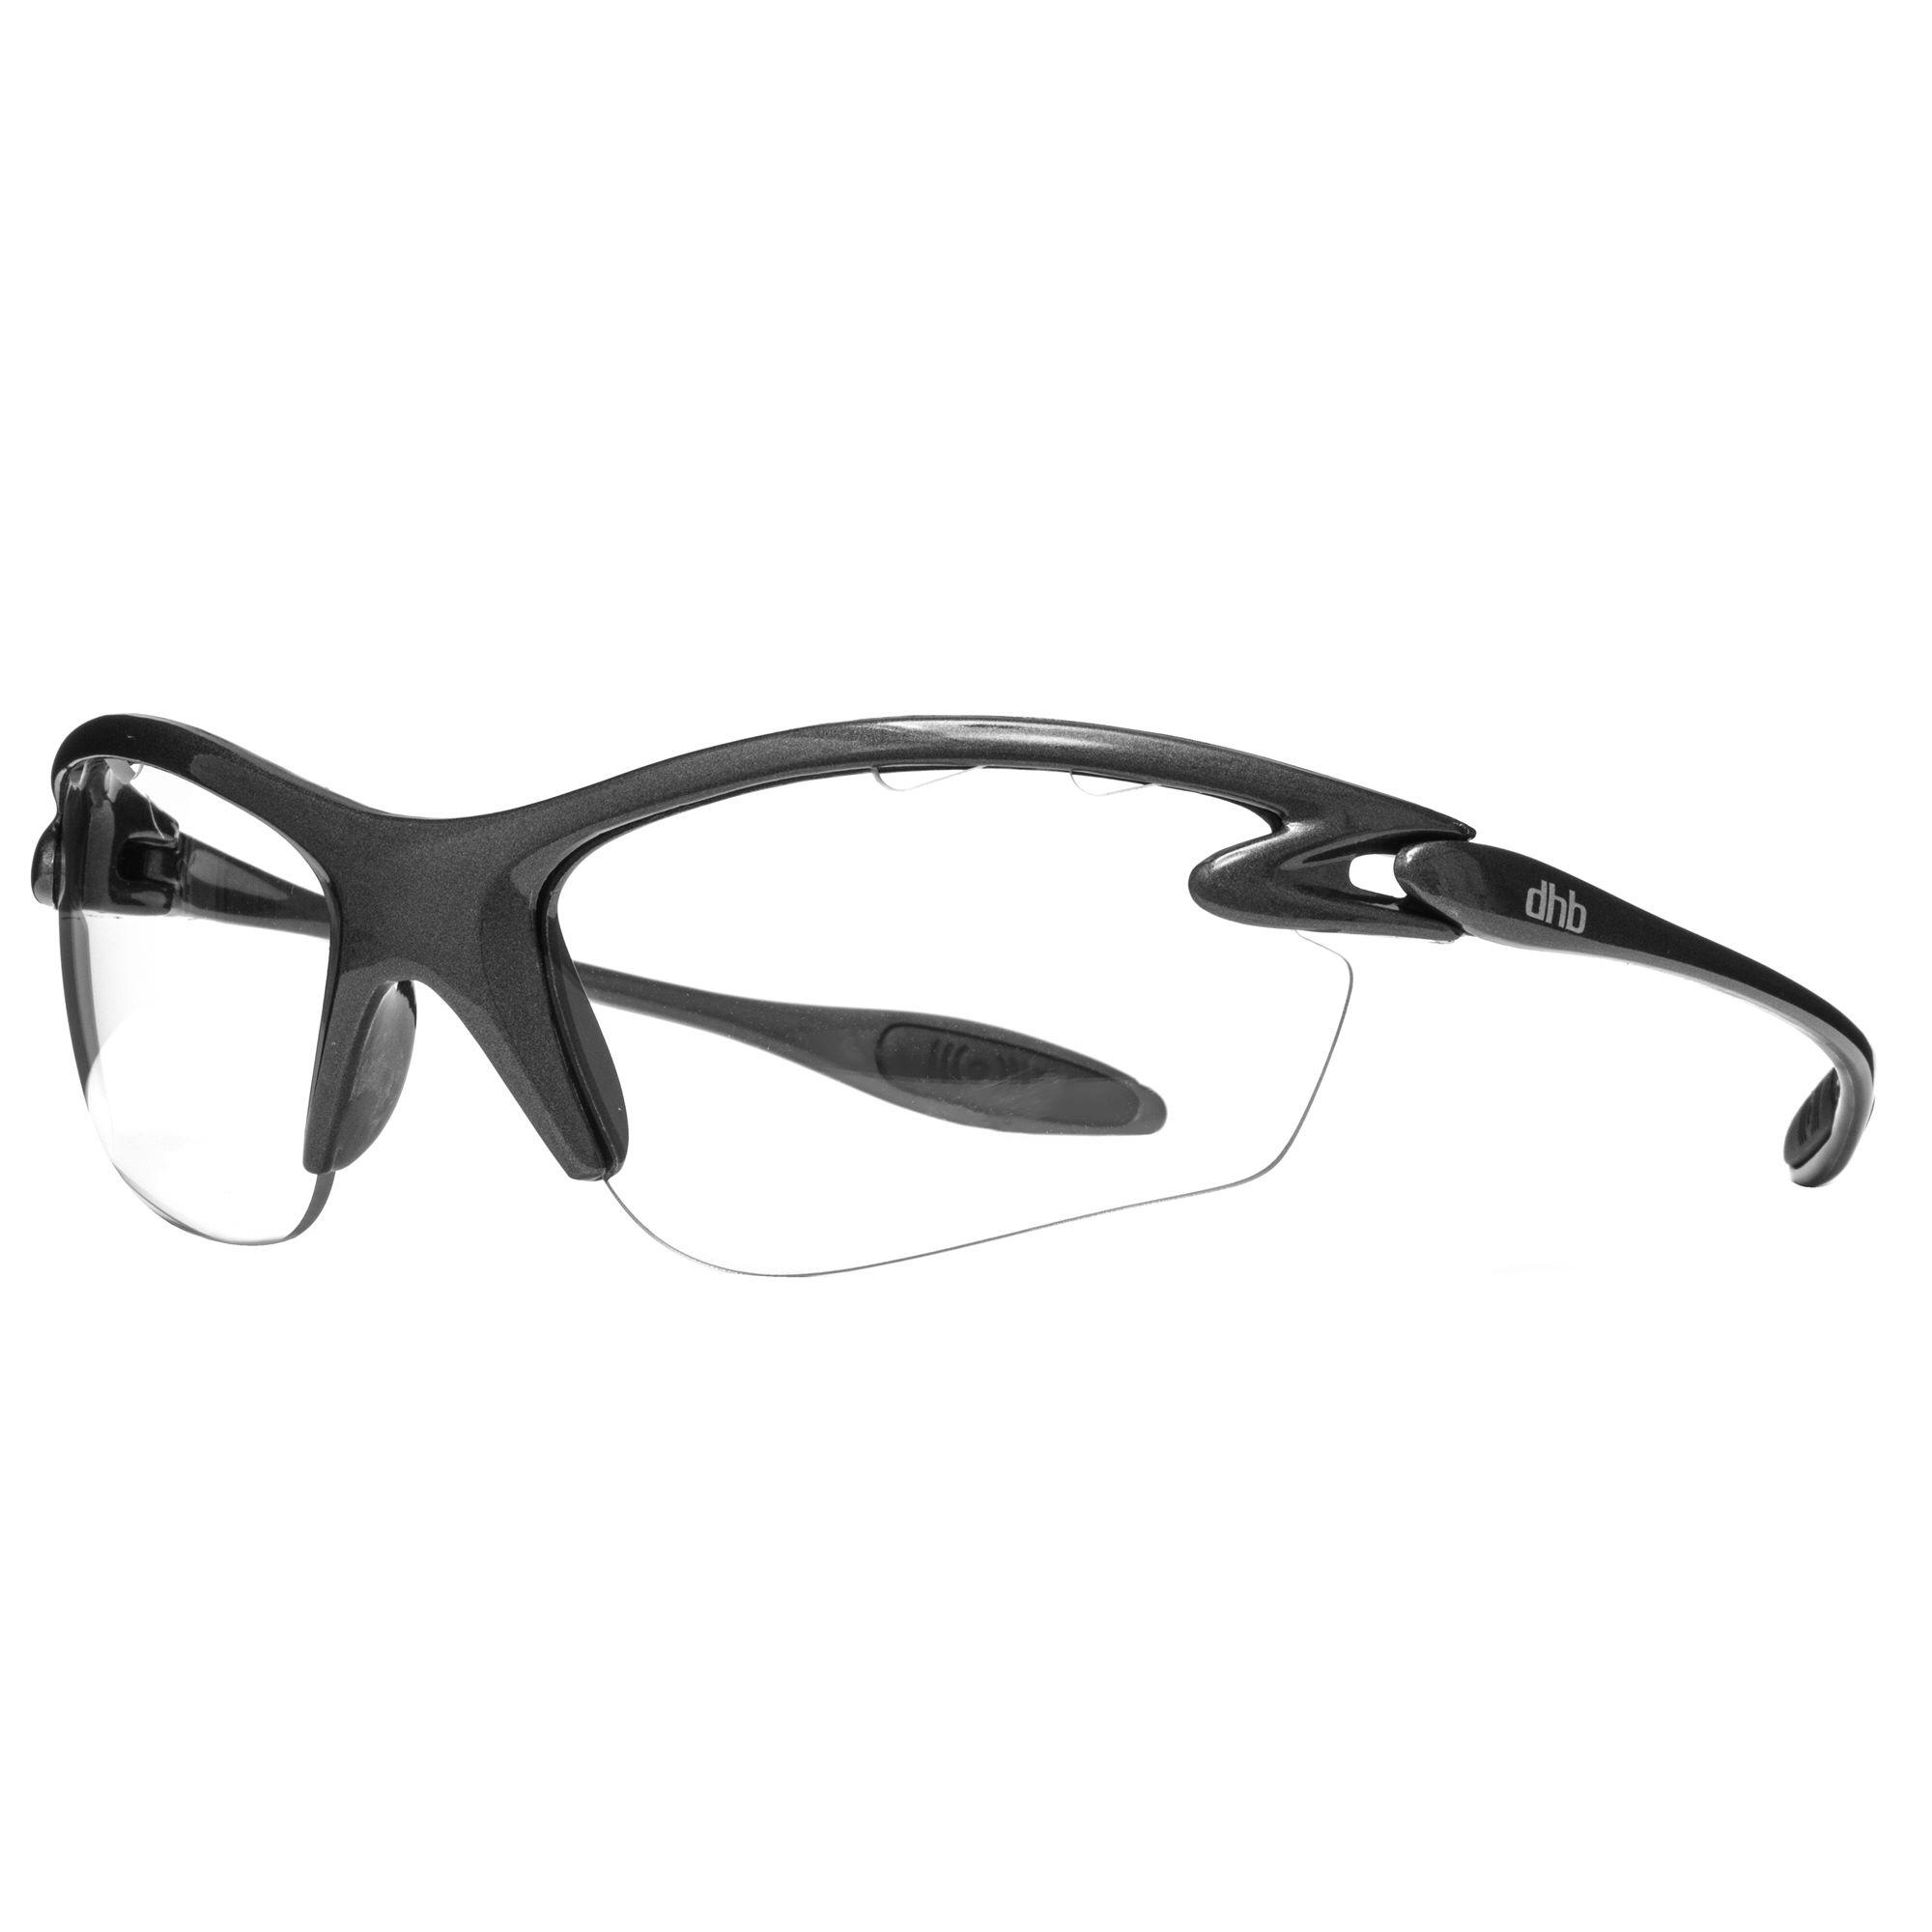 Dhb Ultralite Sunglasses - Gunmetal/clear